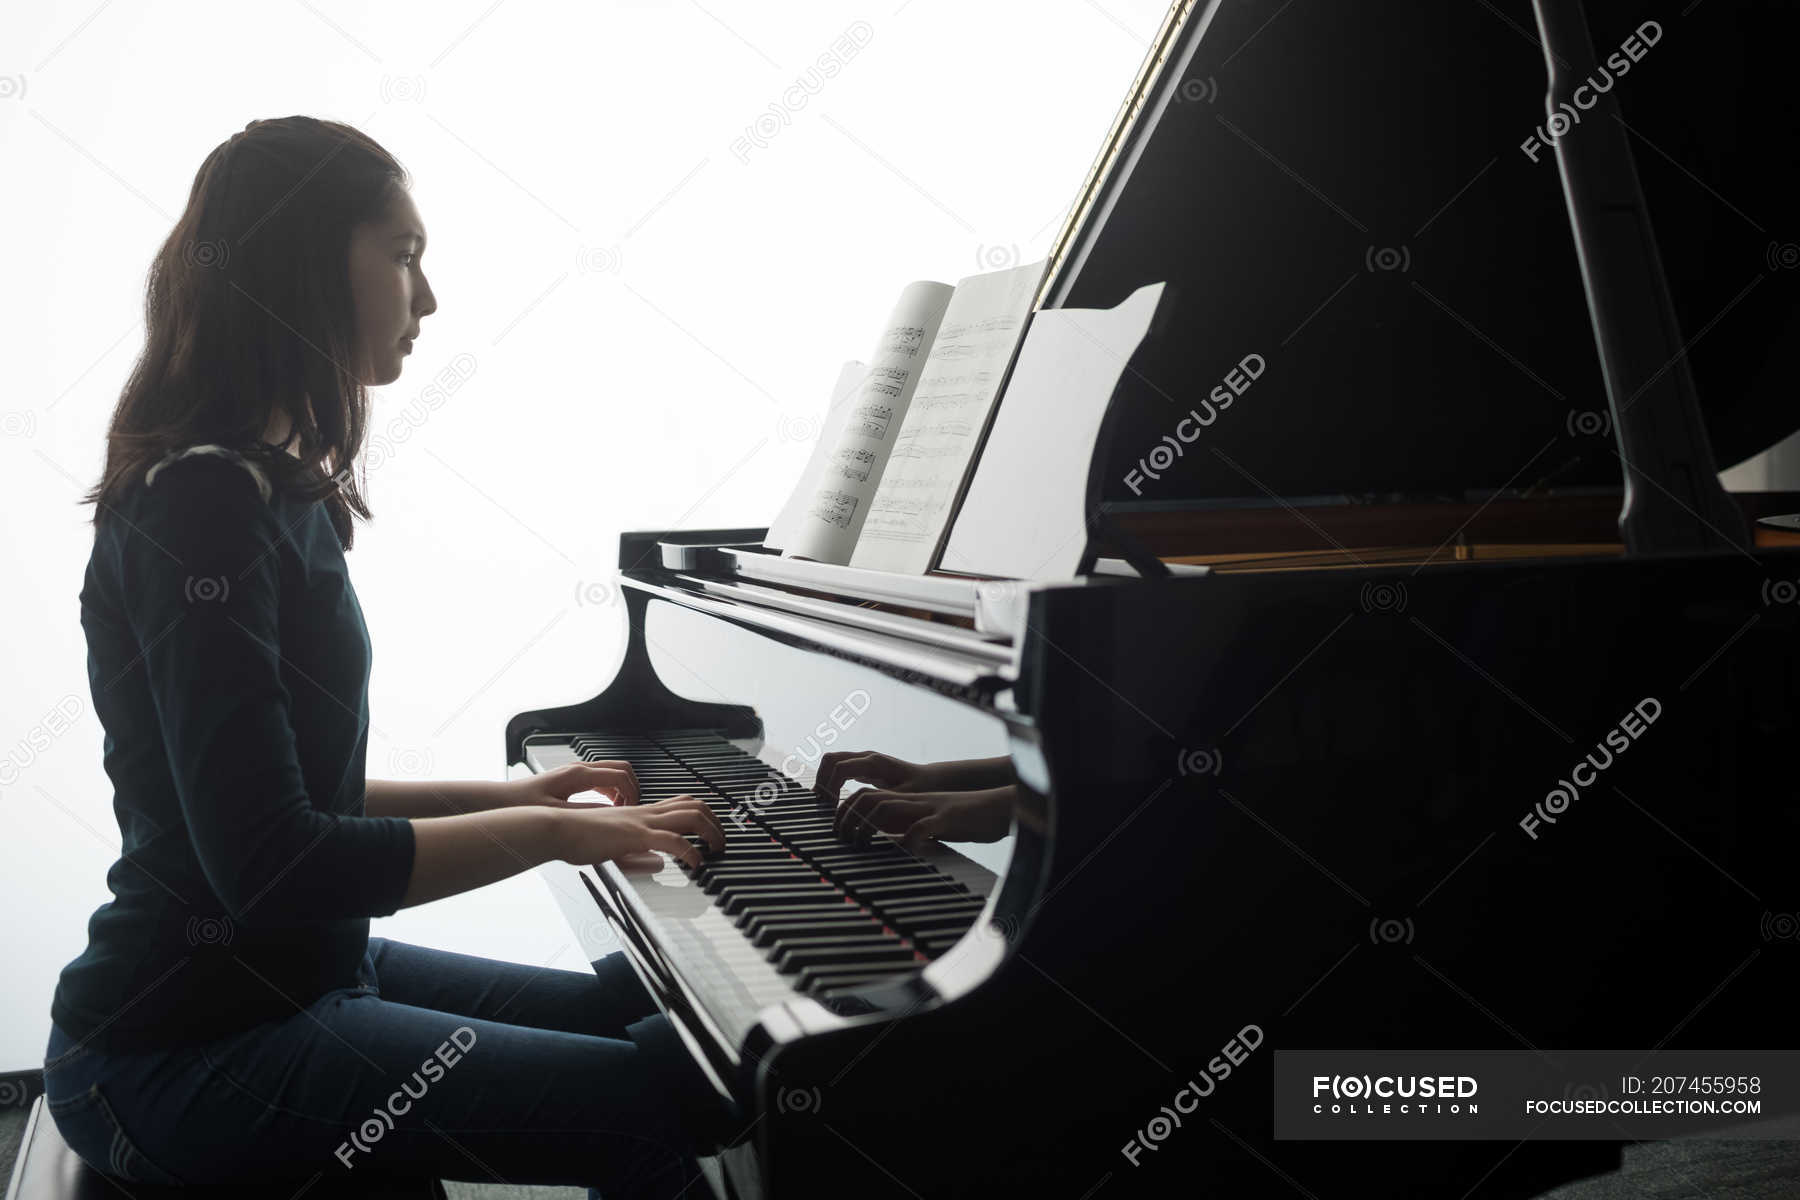 She play piano well. Девушка и пианино. Девушка за роялем в музыкальной школе. Фортепьяно вид сбоку.